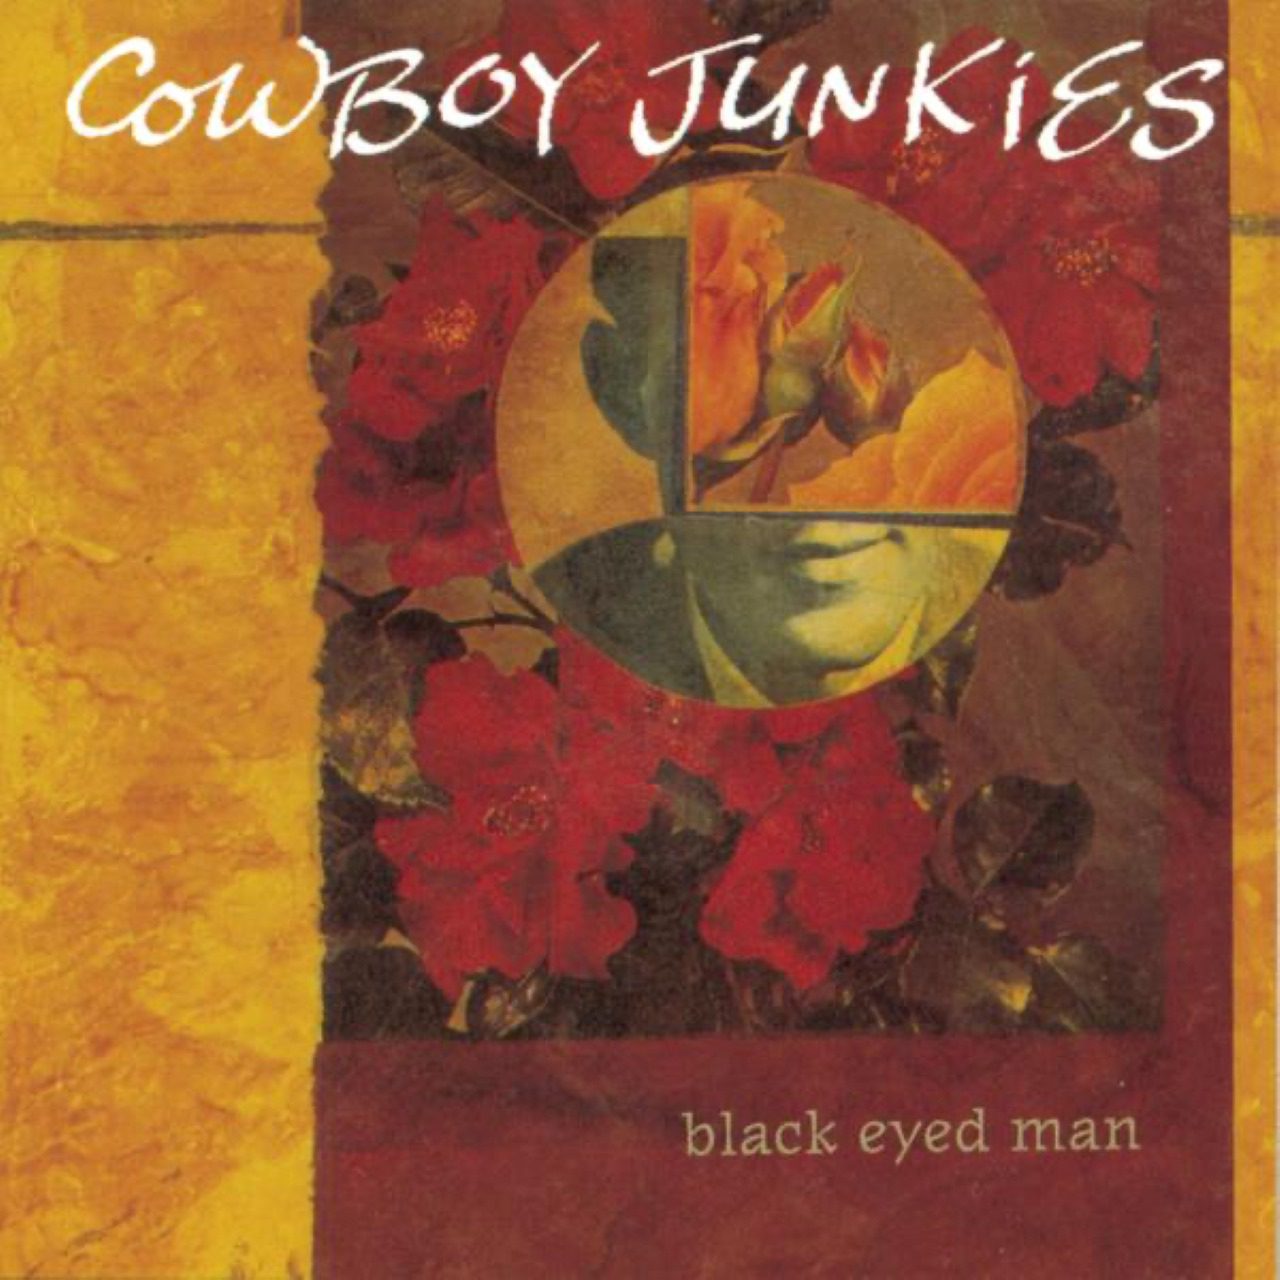 Cowboy Junkies – Black Eyed Man cover album